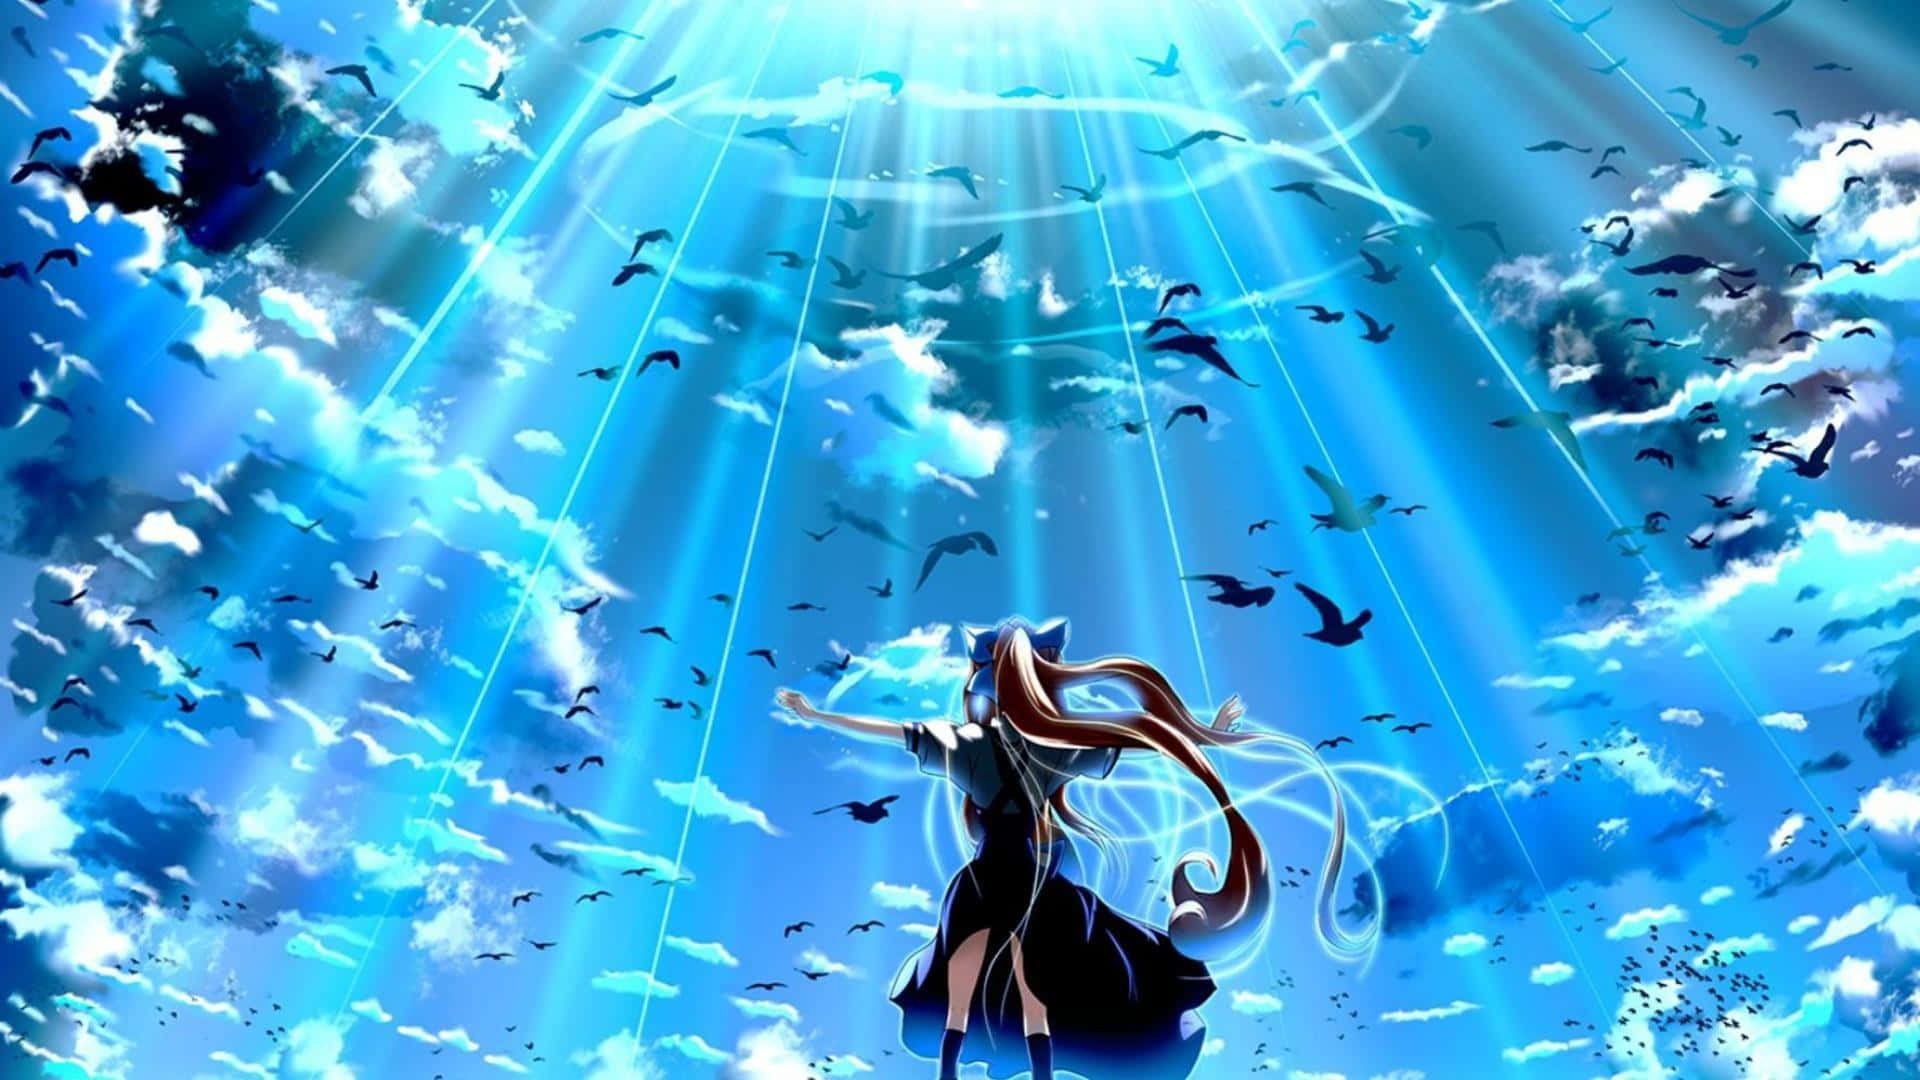 Google Anime Blue Rays Wallpaper